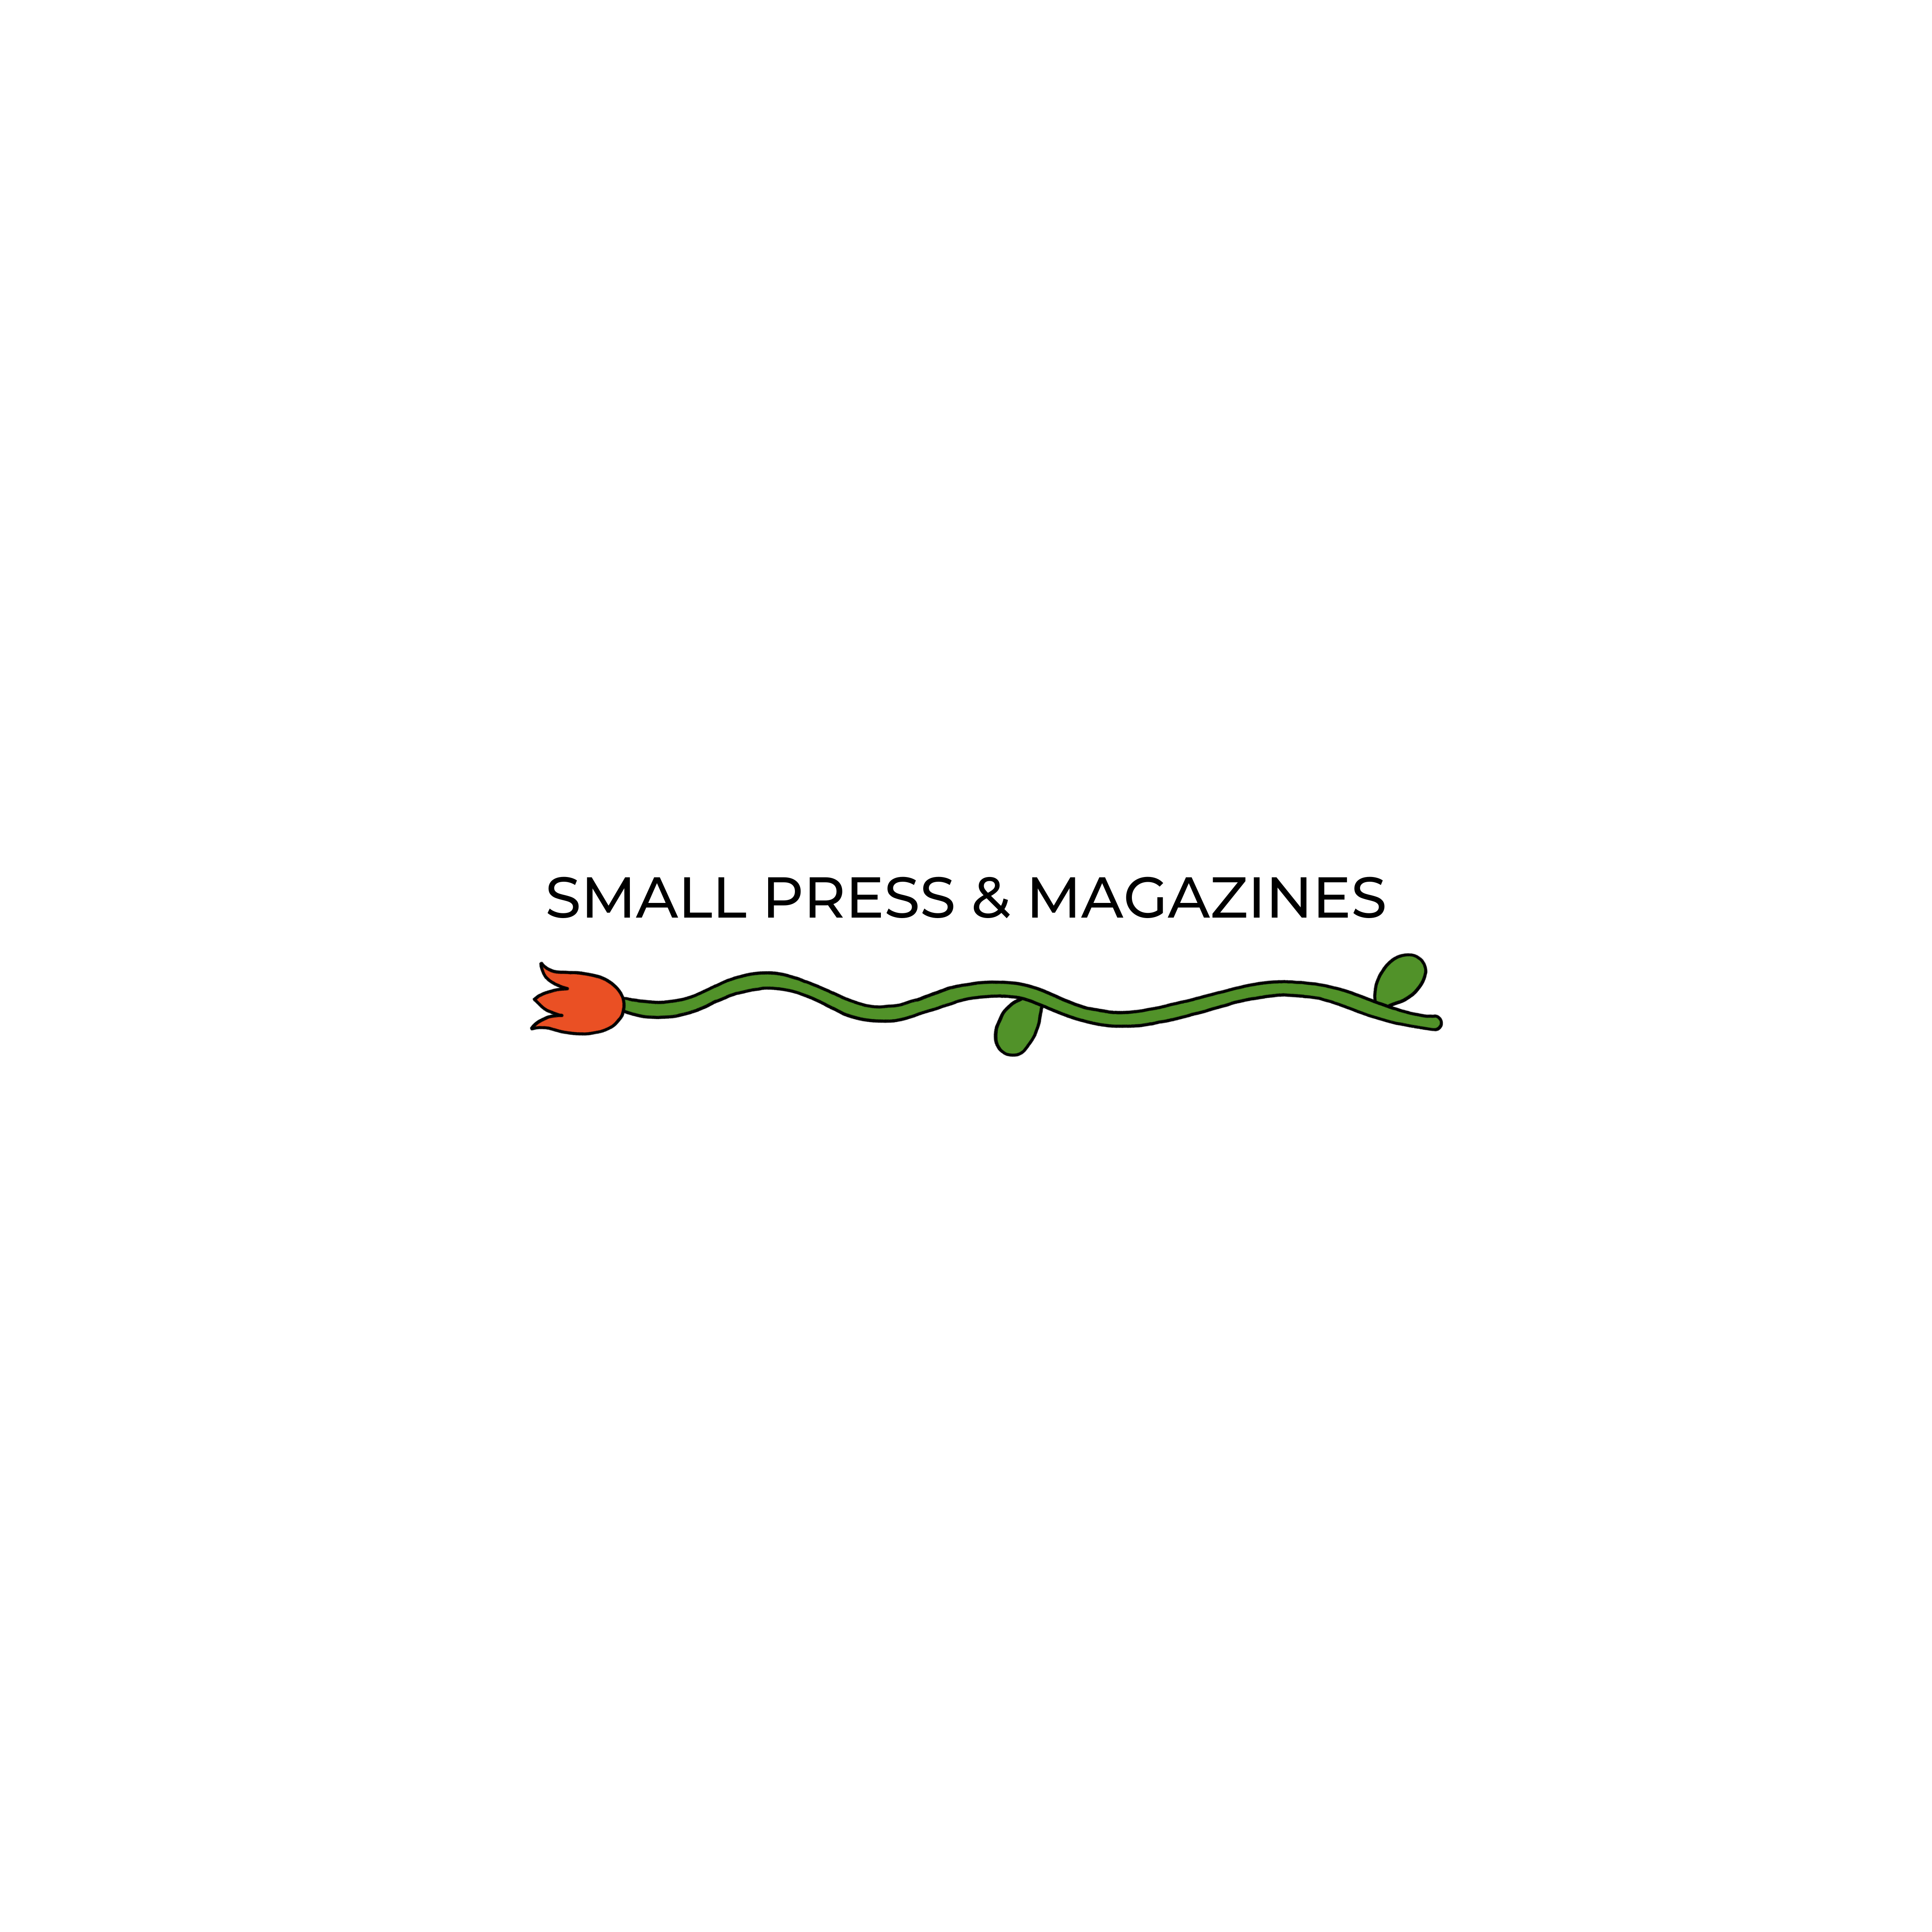 SMALL PRESS & MAGAZINES